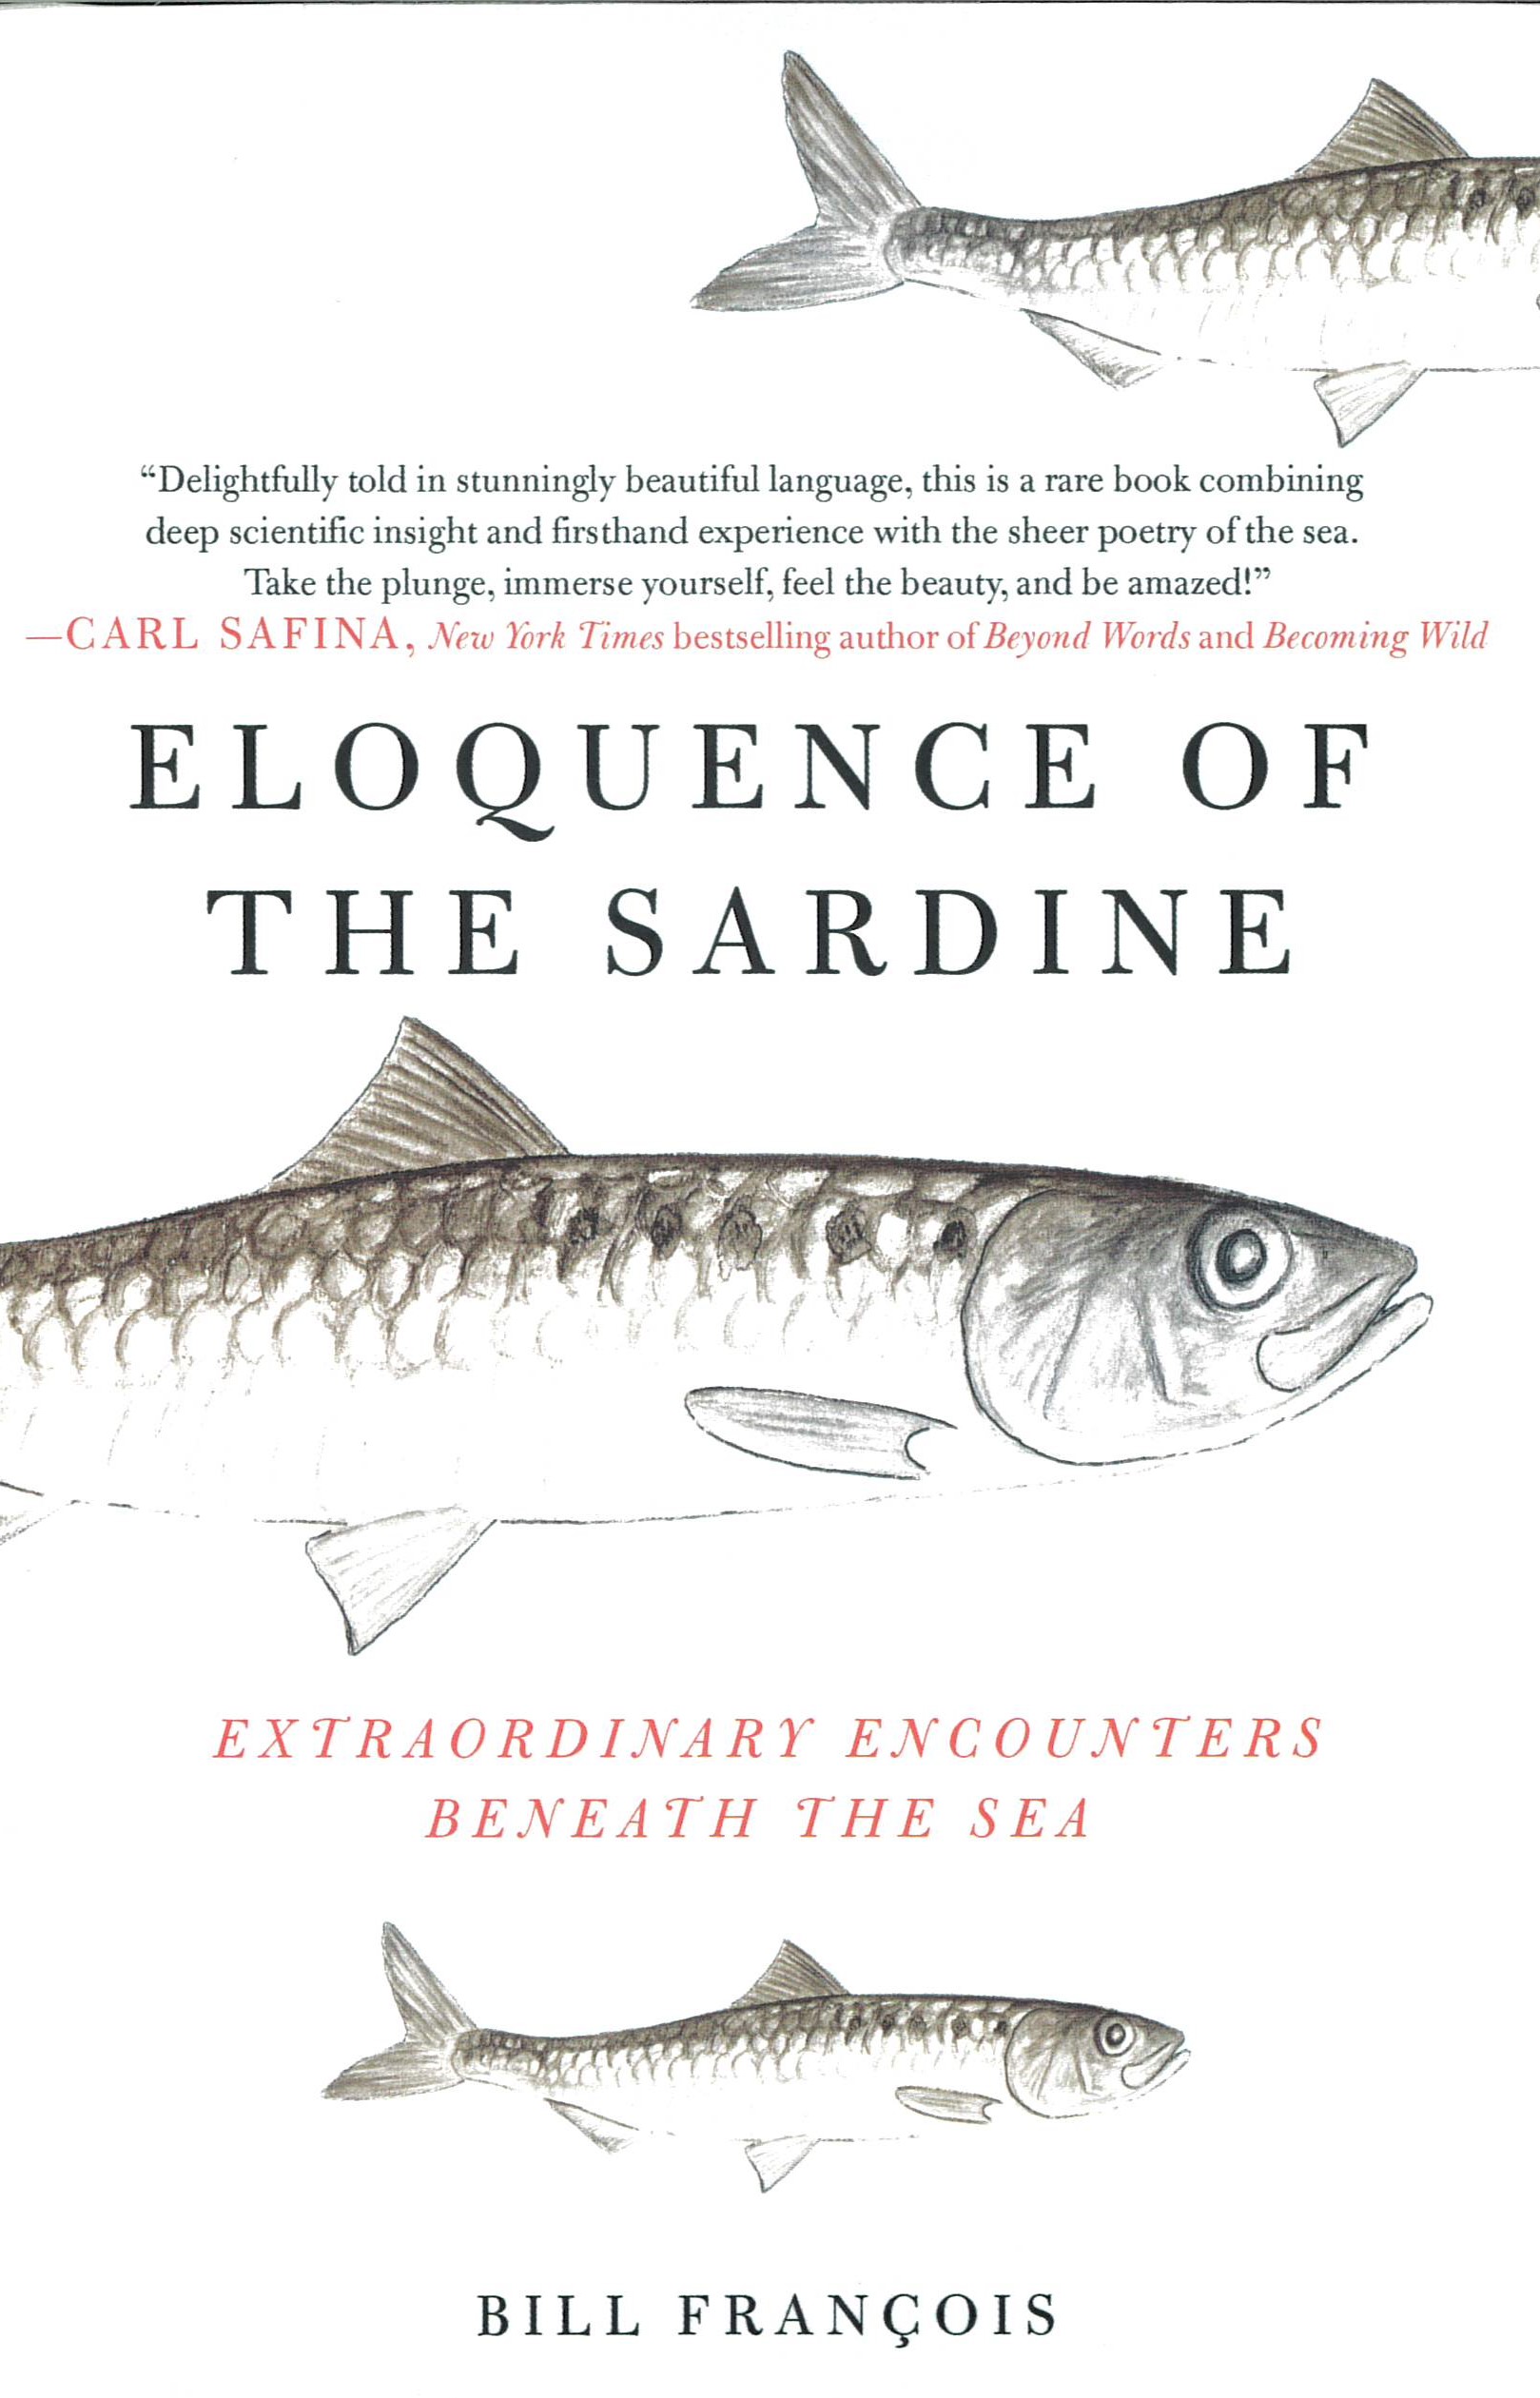 Eloquence of the sardine : extraordinary encounters beneath the sea /